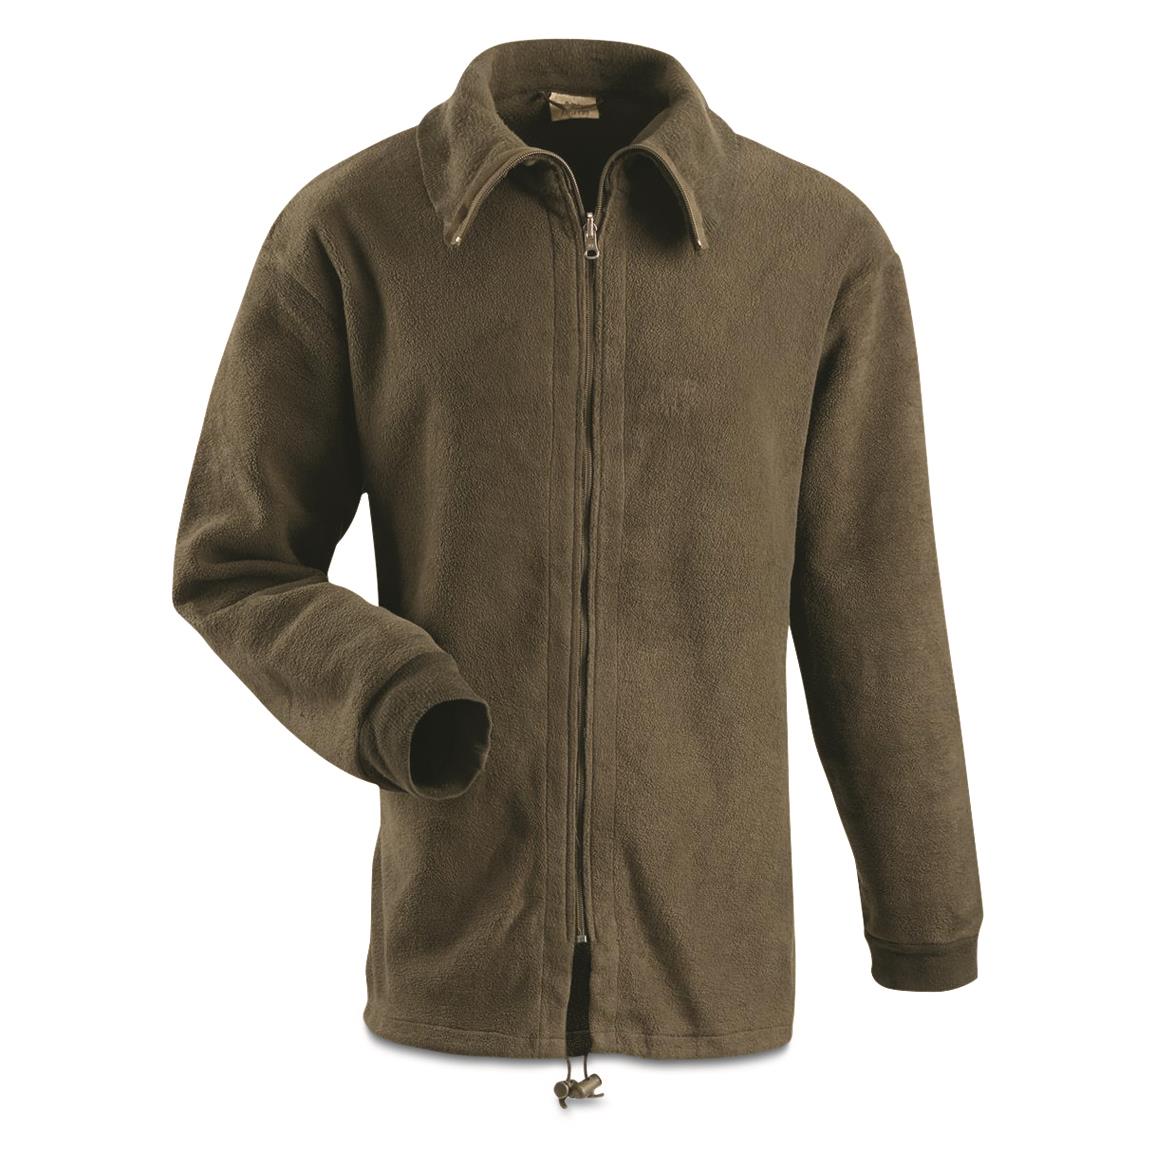 Belgian Military Surplus Heavyweight Fleece Jacket, Like New, Olive Drab